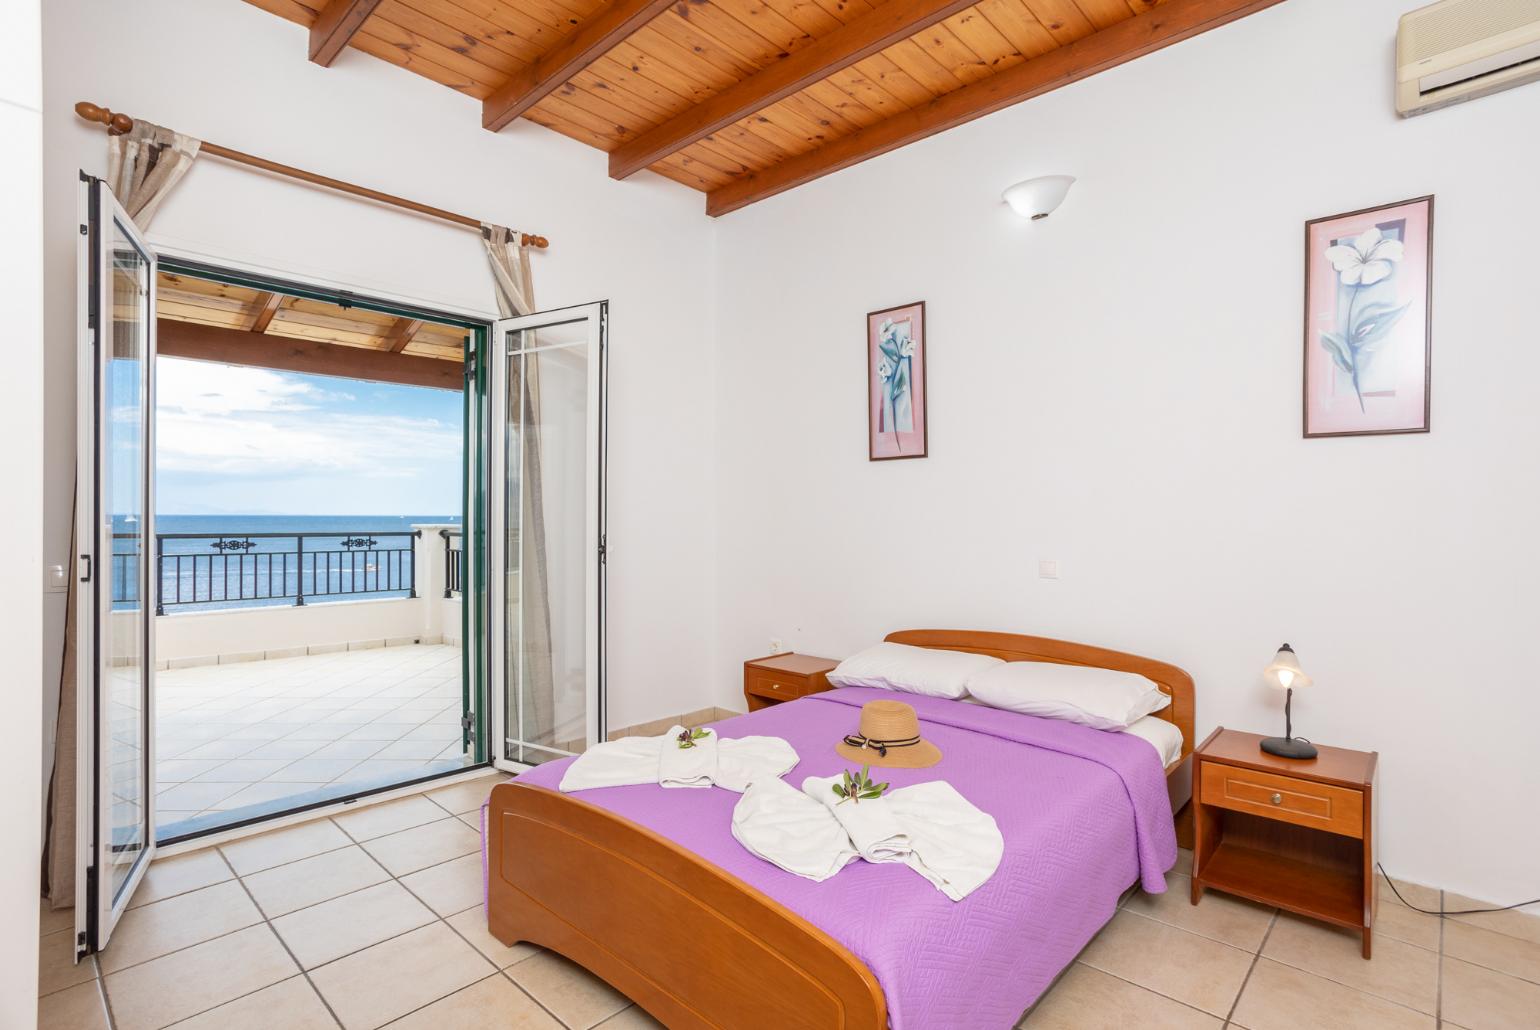 Double bedroom with en suite bathroom, A/C, terrace access, and sea views